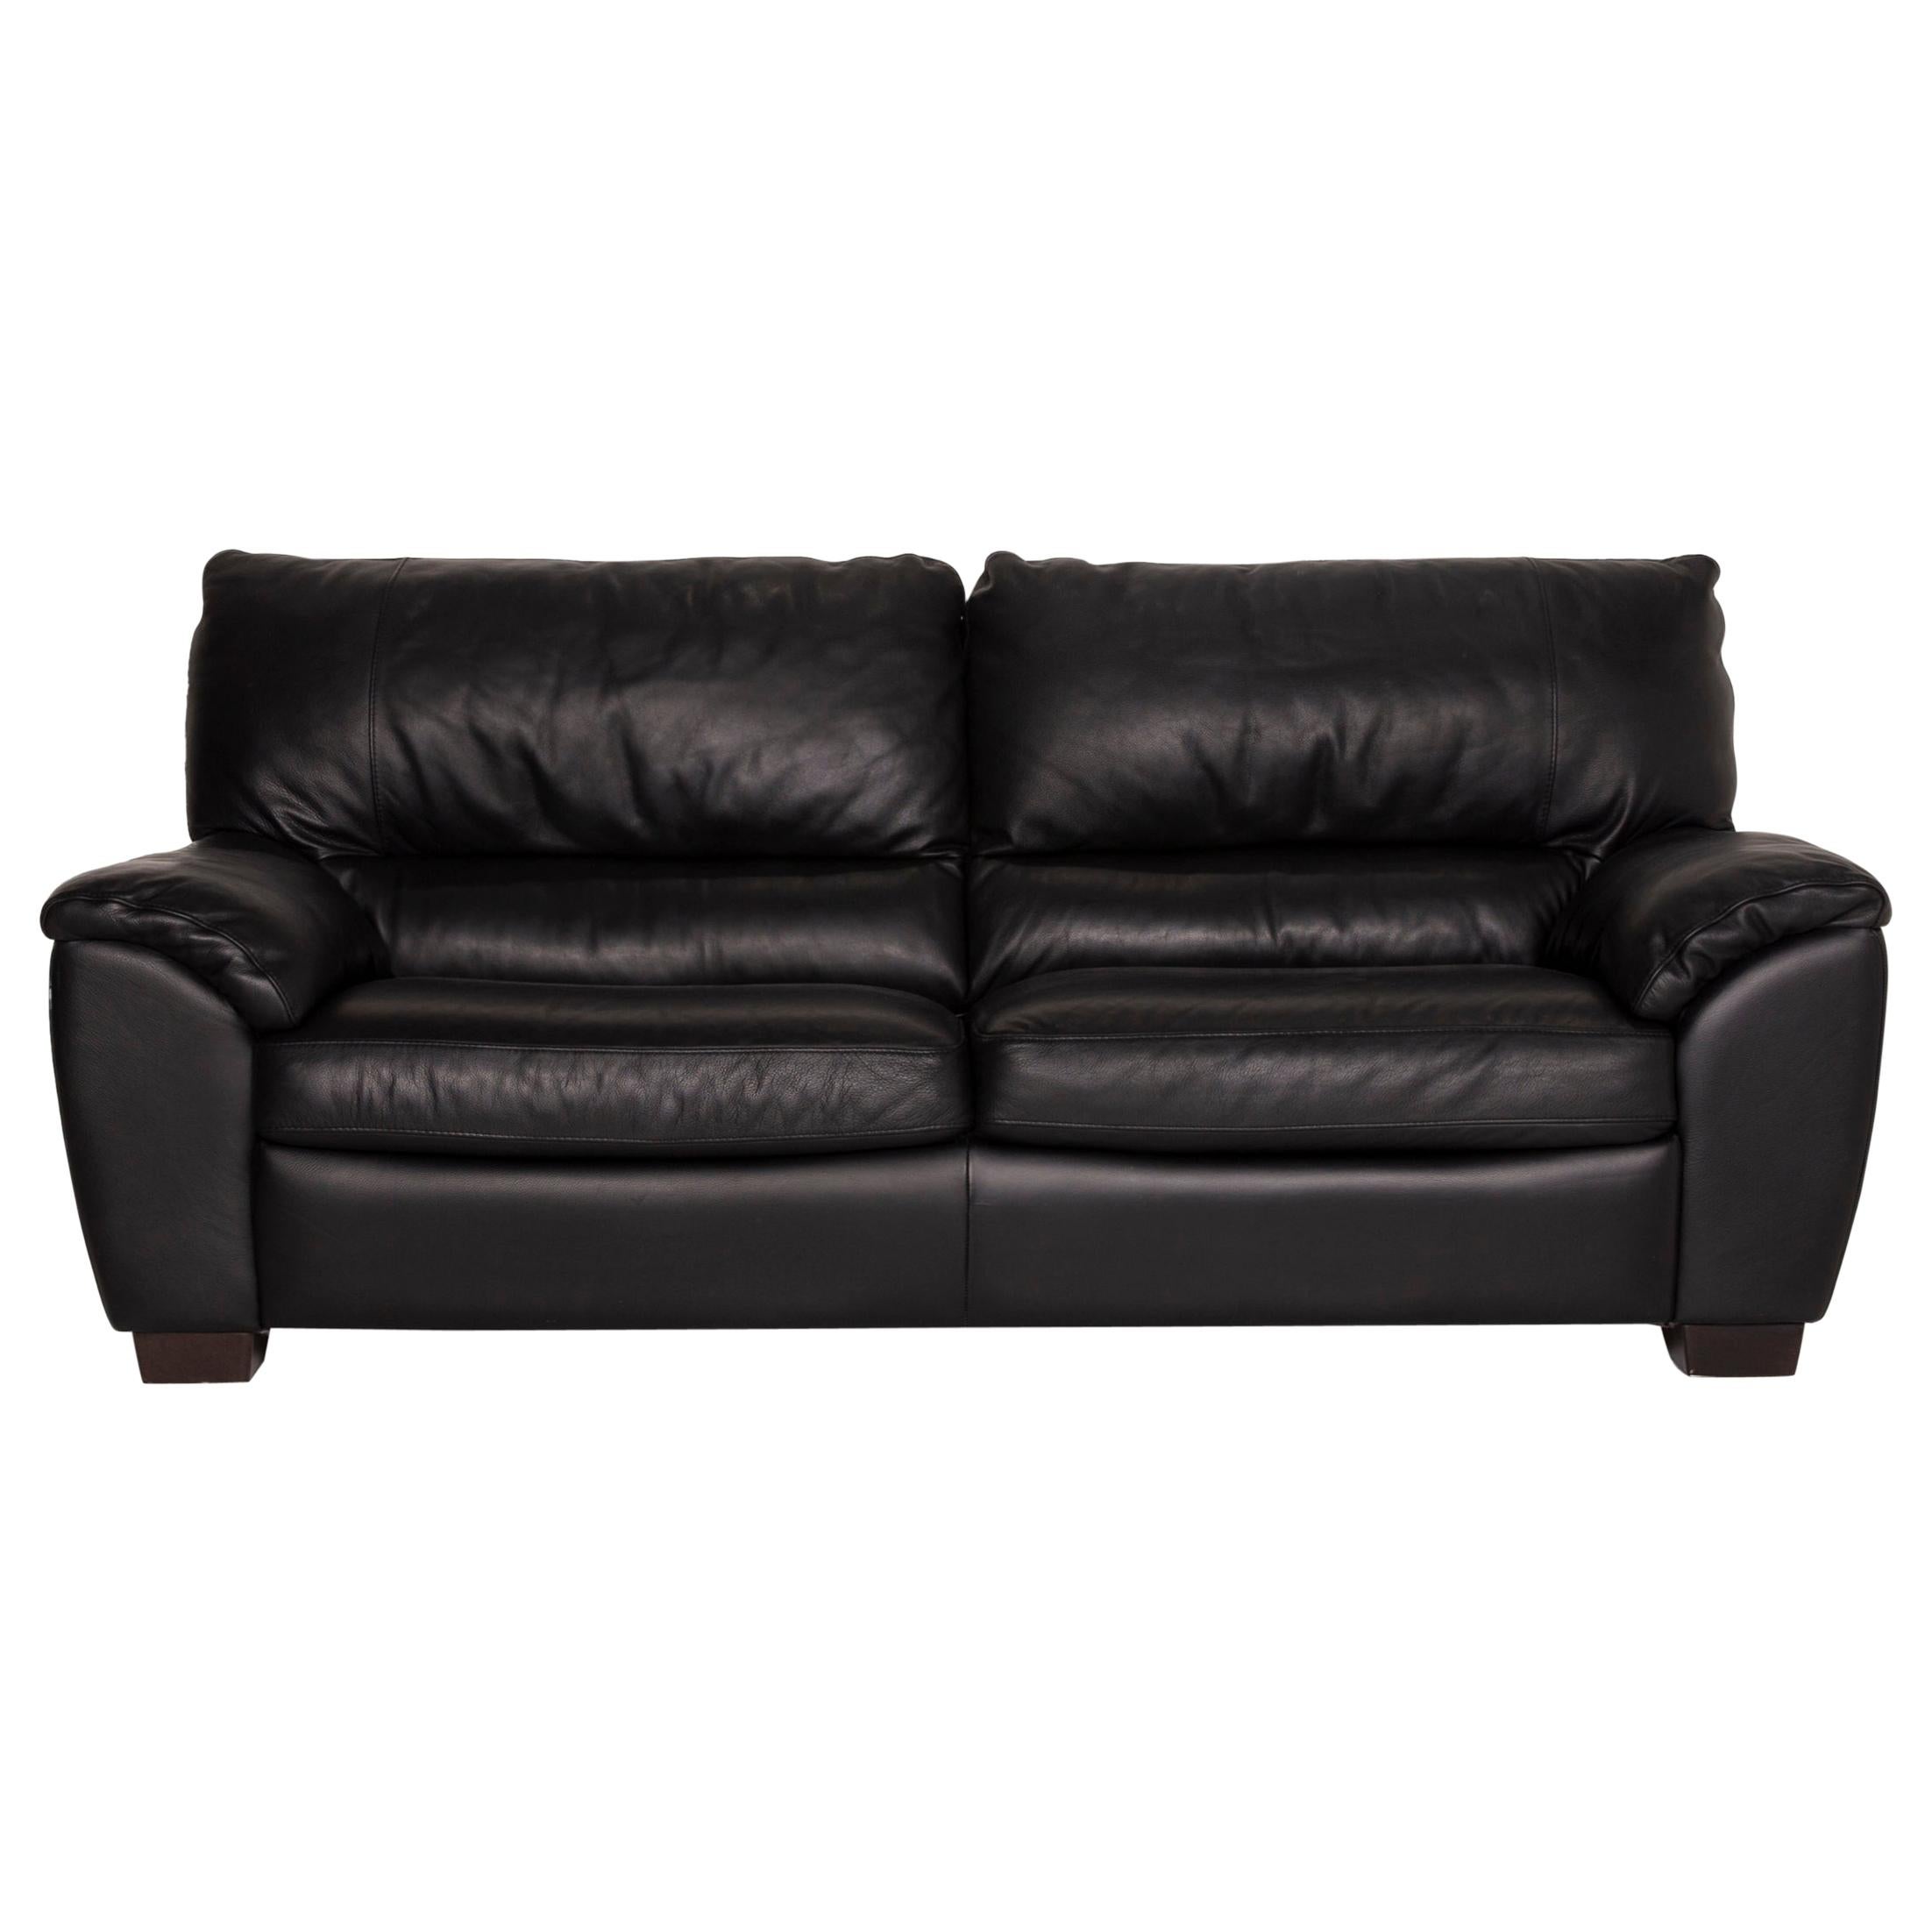 Natuzzi Two-Seater Leather Sofa Black